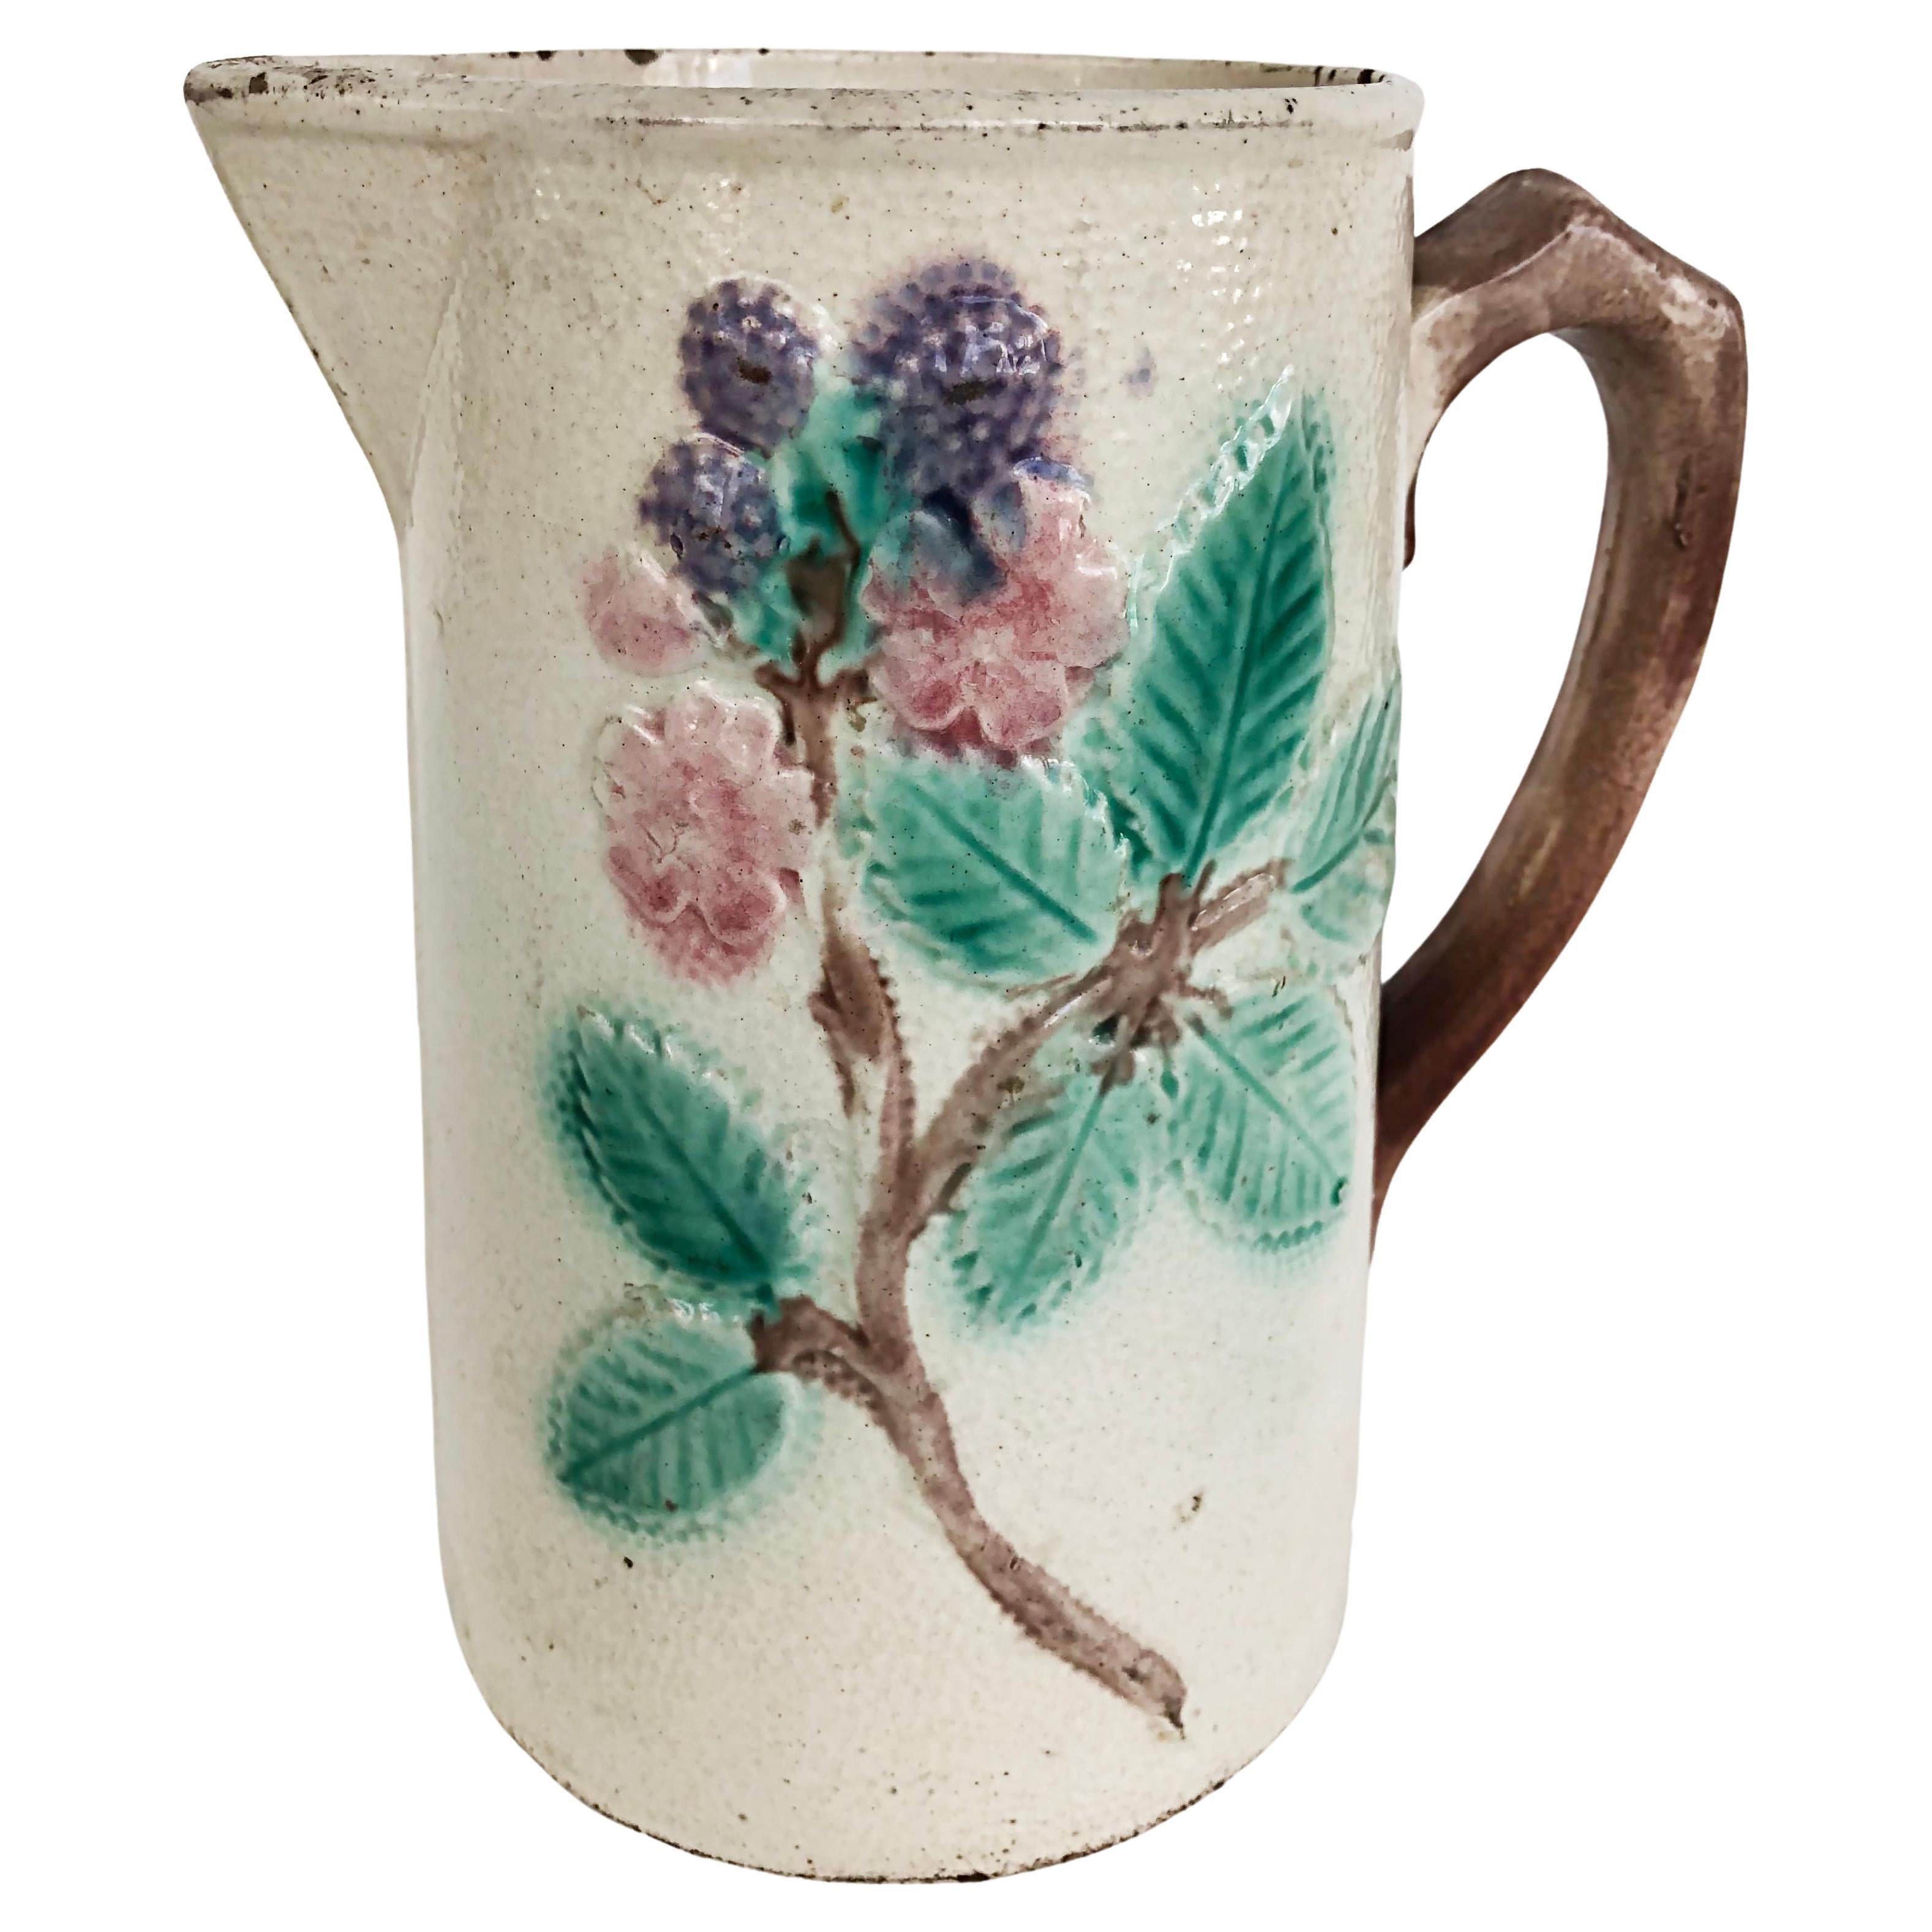 Vintage-Majolika-Krug des 20. Jahrhunderts mit Blumenblattmuster und Beeren